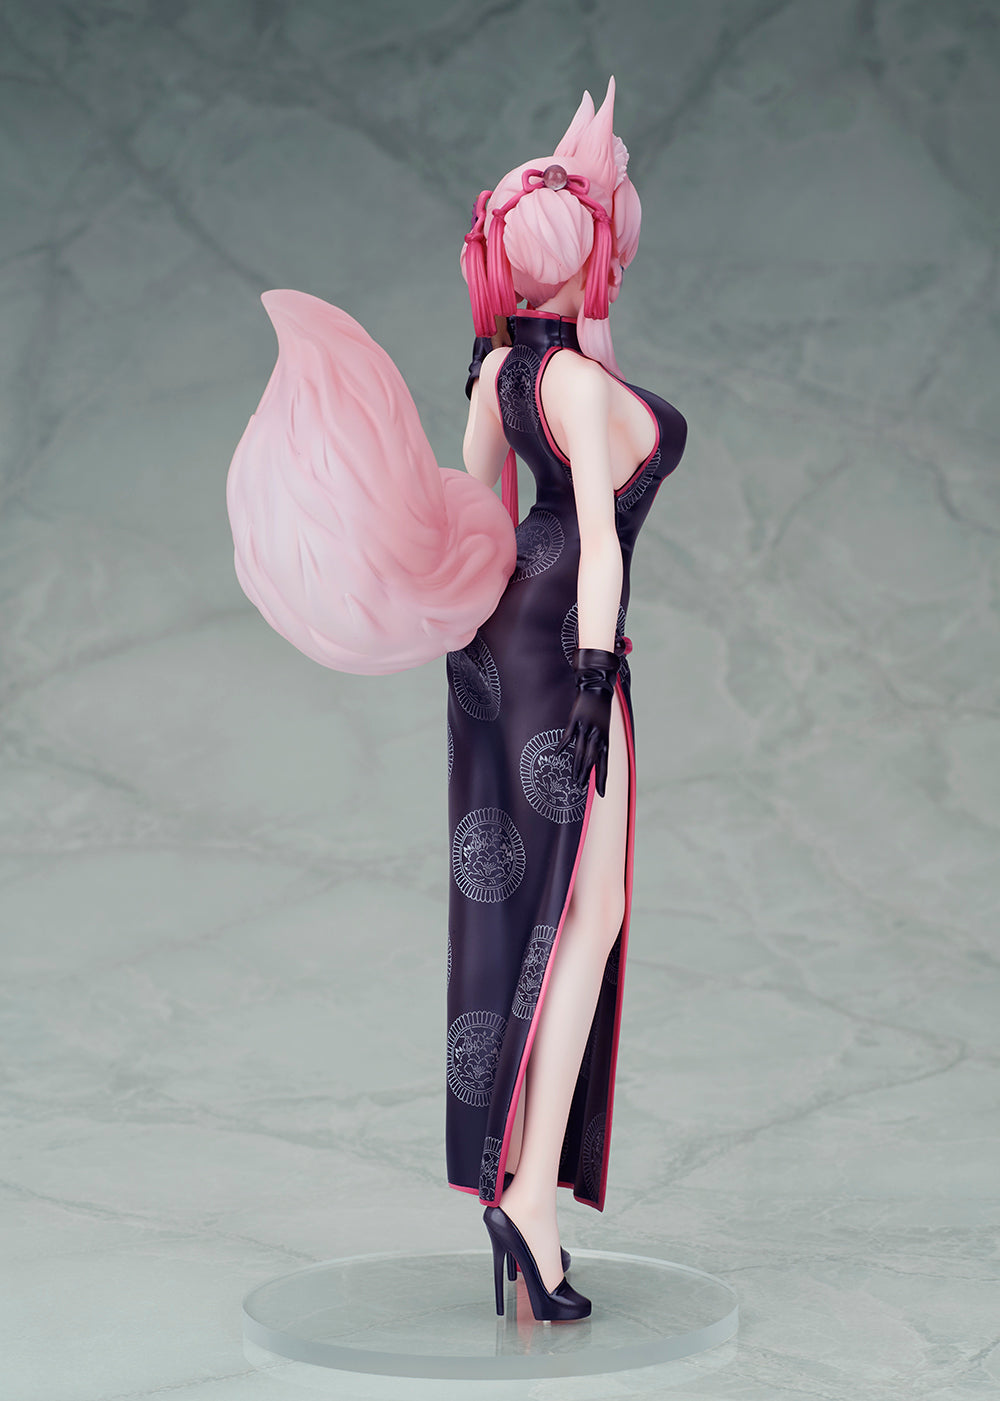 Fate/Grand Order Tamamo Vitch Koyanskaya (China Dress Ver.) Complete Figure - Glacier Hobbies - FLARE